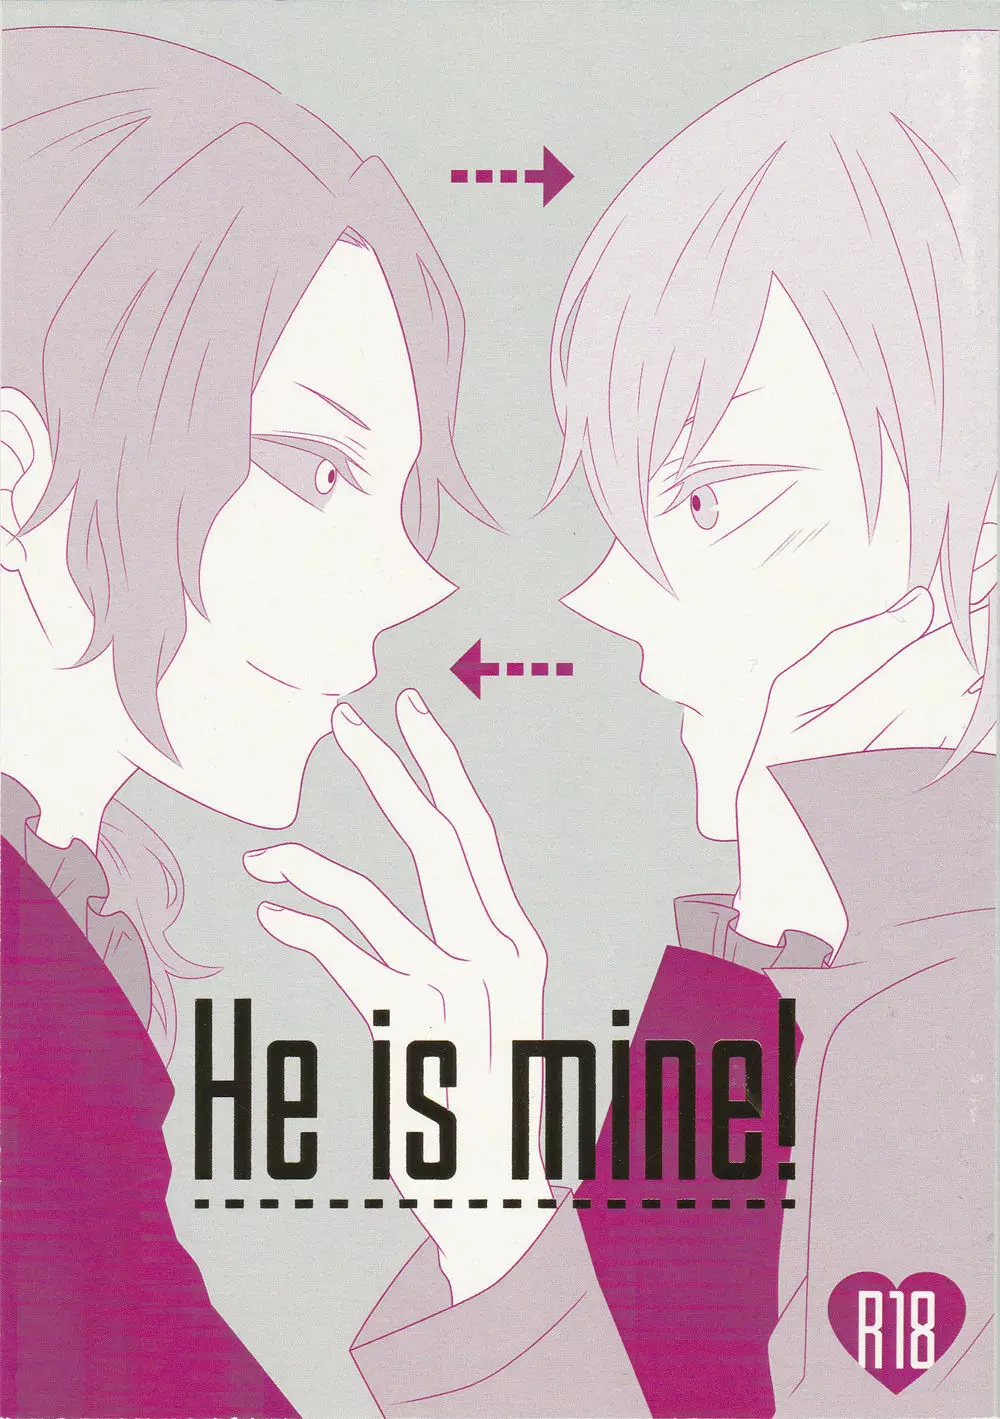 He is mine!